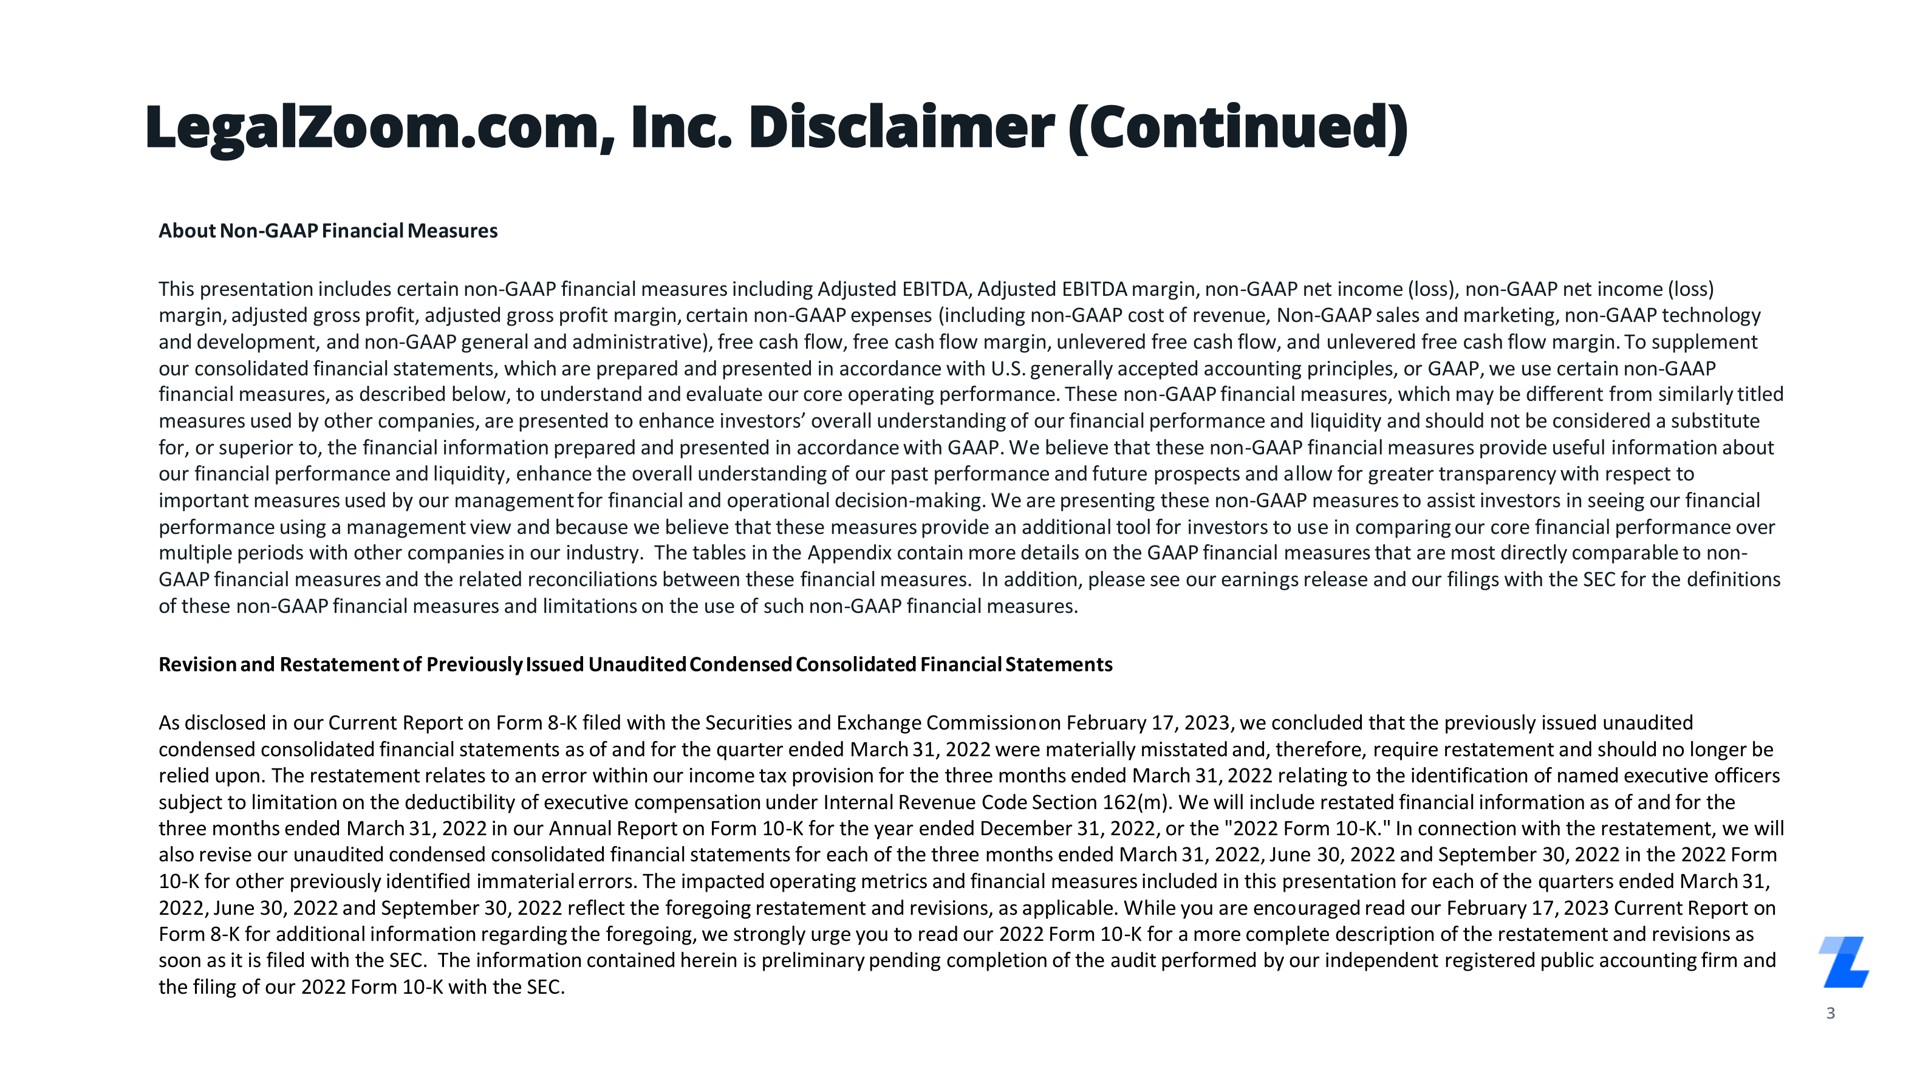 disclaimer continued | LegalZoom.com